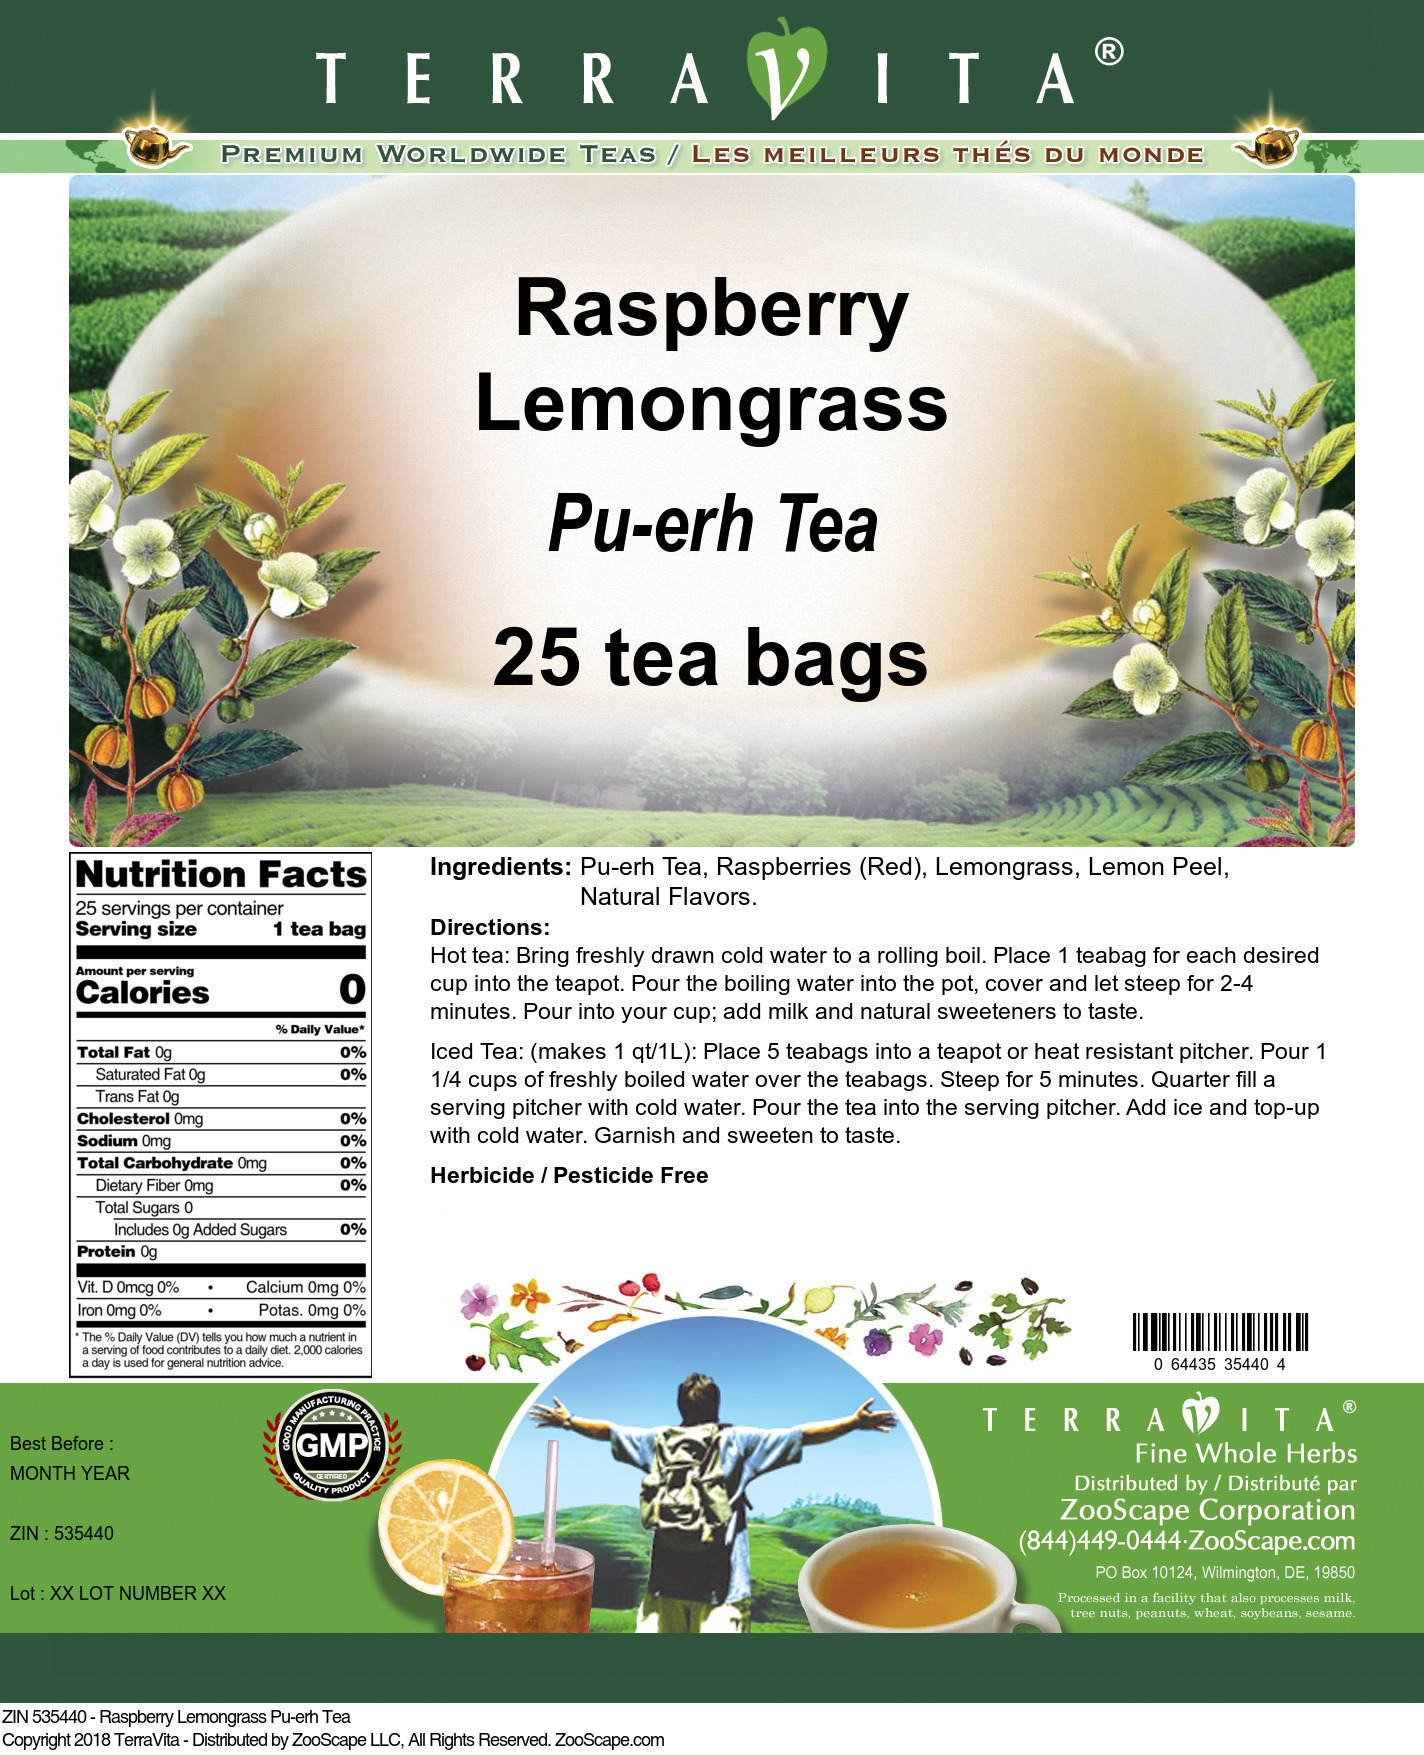 Raspberry Lemongrass Pu-erh Tea - Label